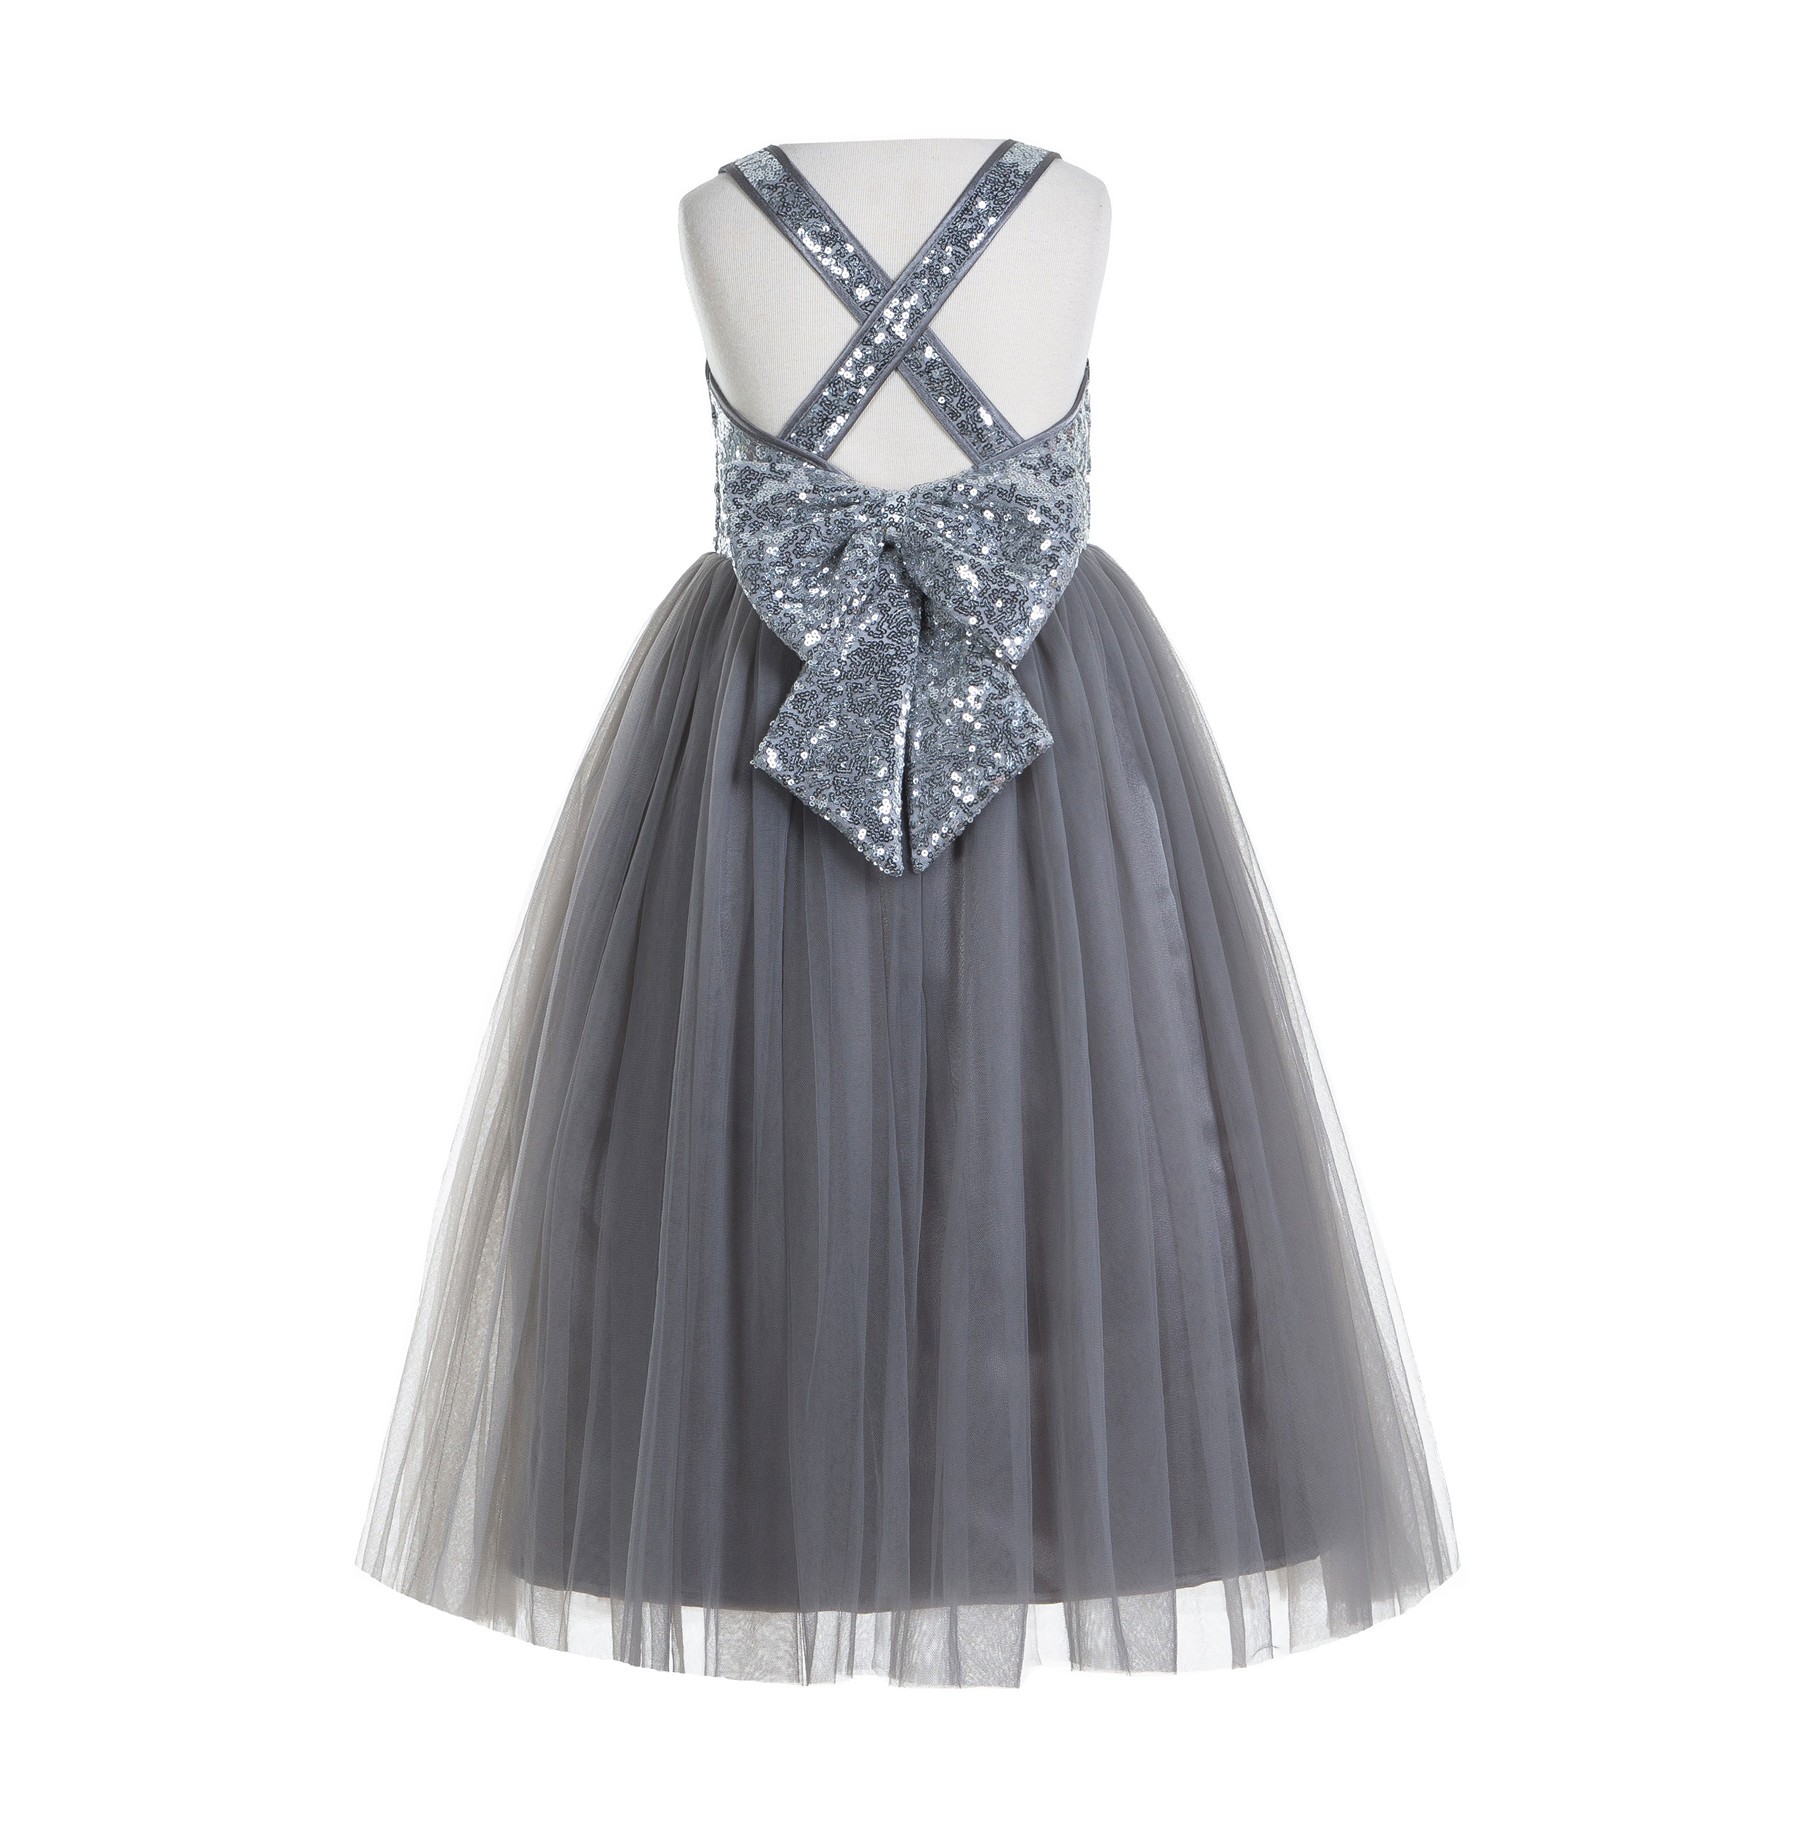 Silver / Merc Crossed Straps A-Line Flower Girl Dress 177